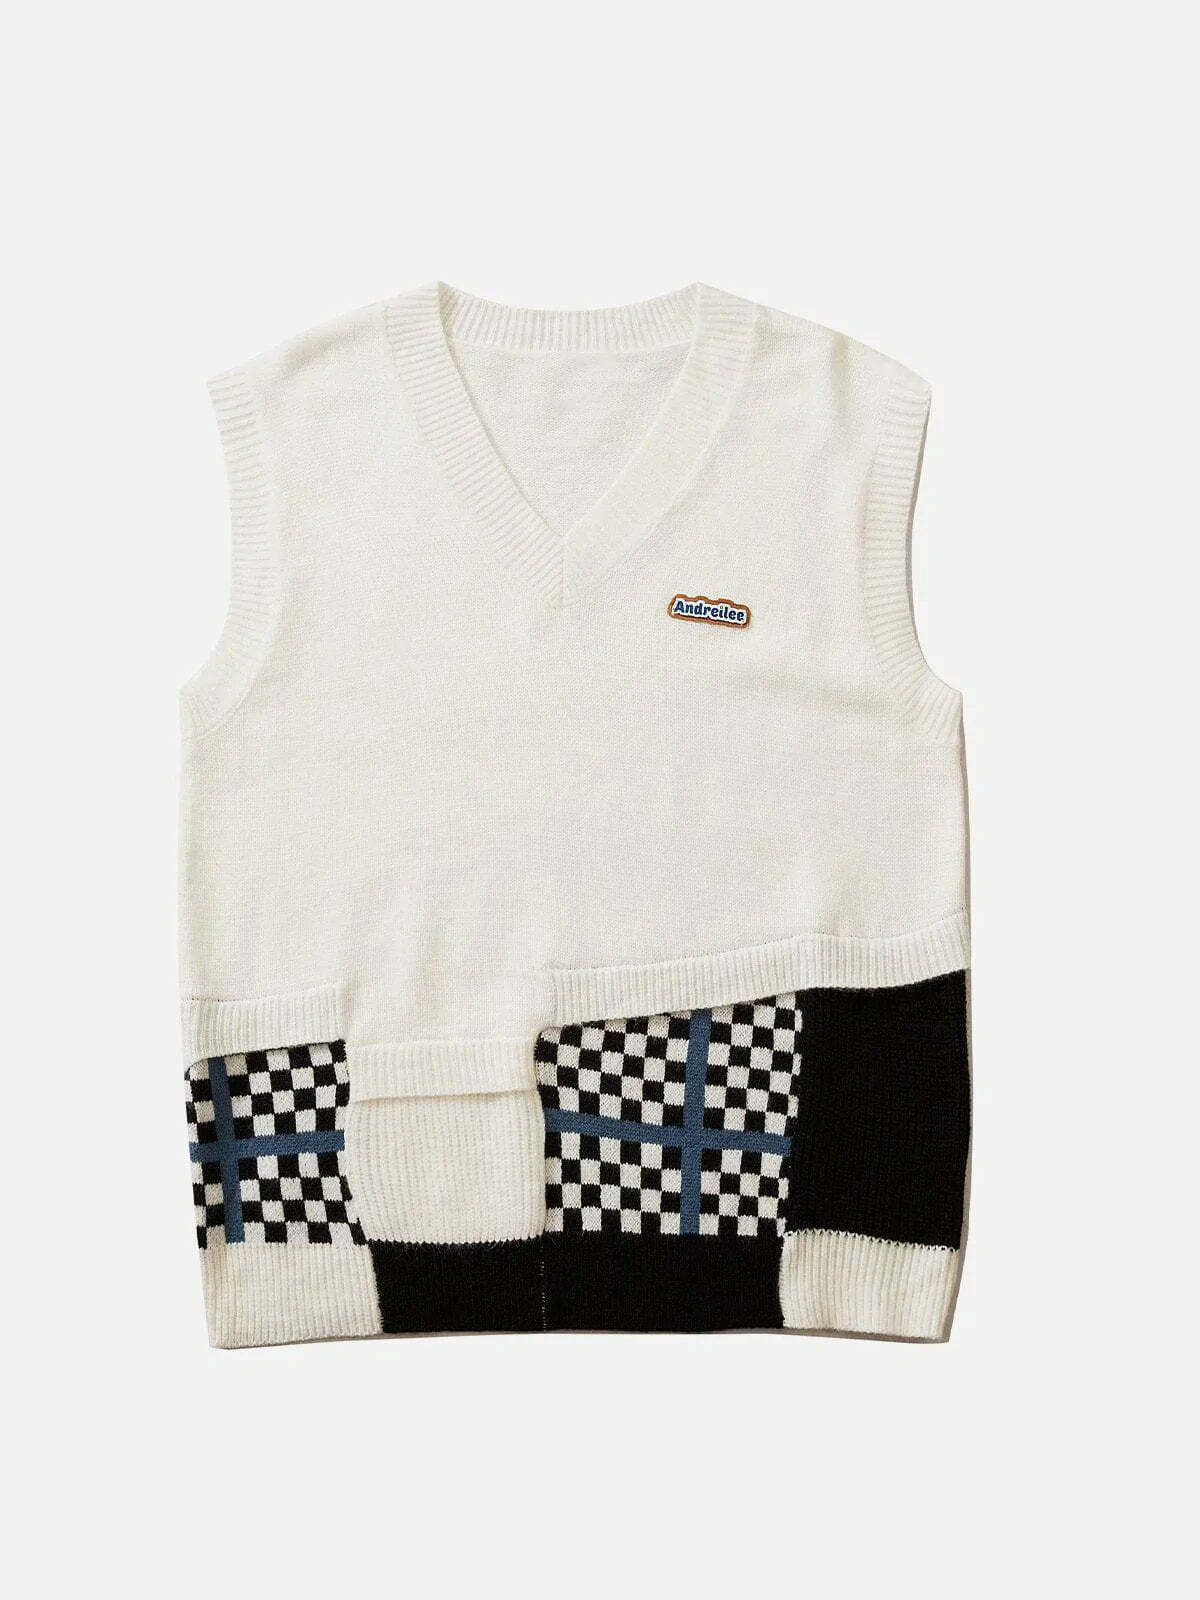 patchwork plaid sweater vest edgy & retro streetwear essential 8404